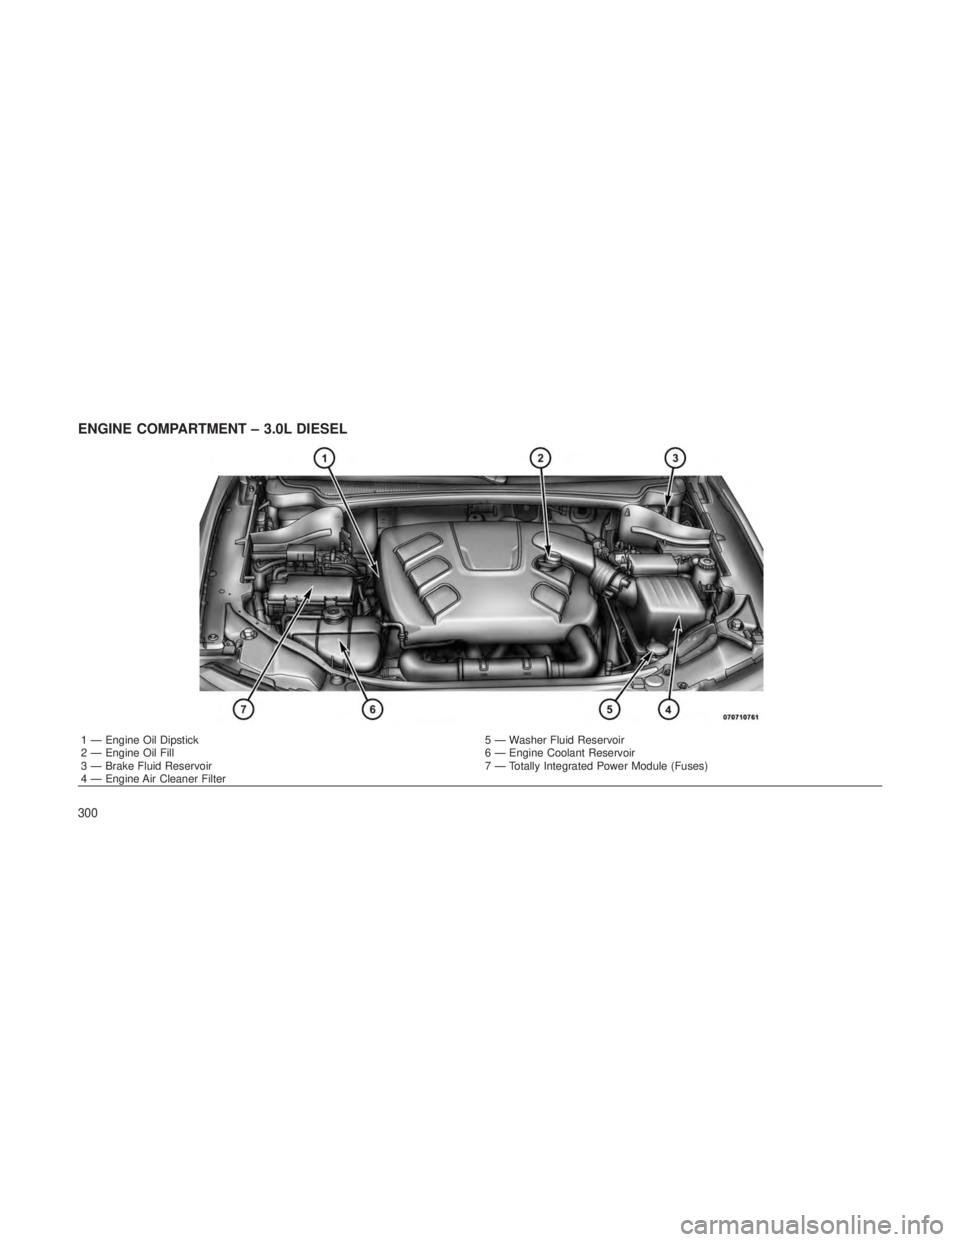 JEEP GRAND CHEROKEE 2012  Owner handbook (in English) ENGINE COMPARTMENT – 3.0L DIESEL
1 — Engine Oil Dipstick5 — Washer Fluid Reservoir
2 — Engine Oil Fill 6 — Engine Coolant Reservoir
3 — Brake Fluid Reservoir 7 — Totally Integrated Power